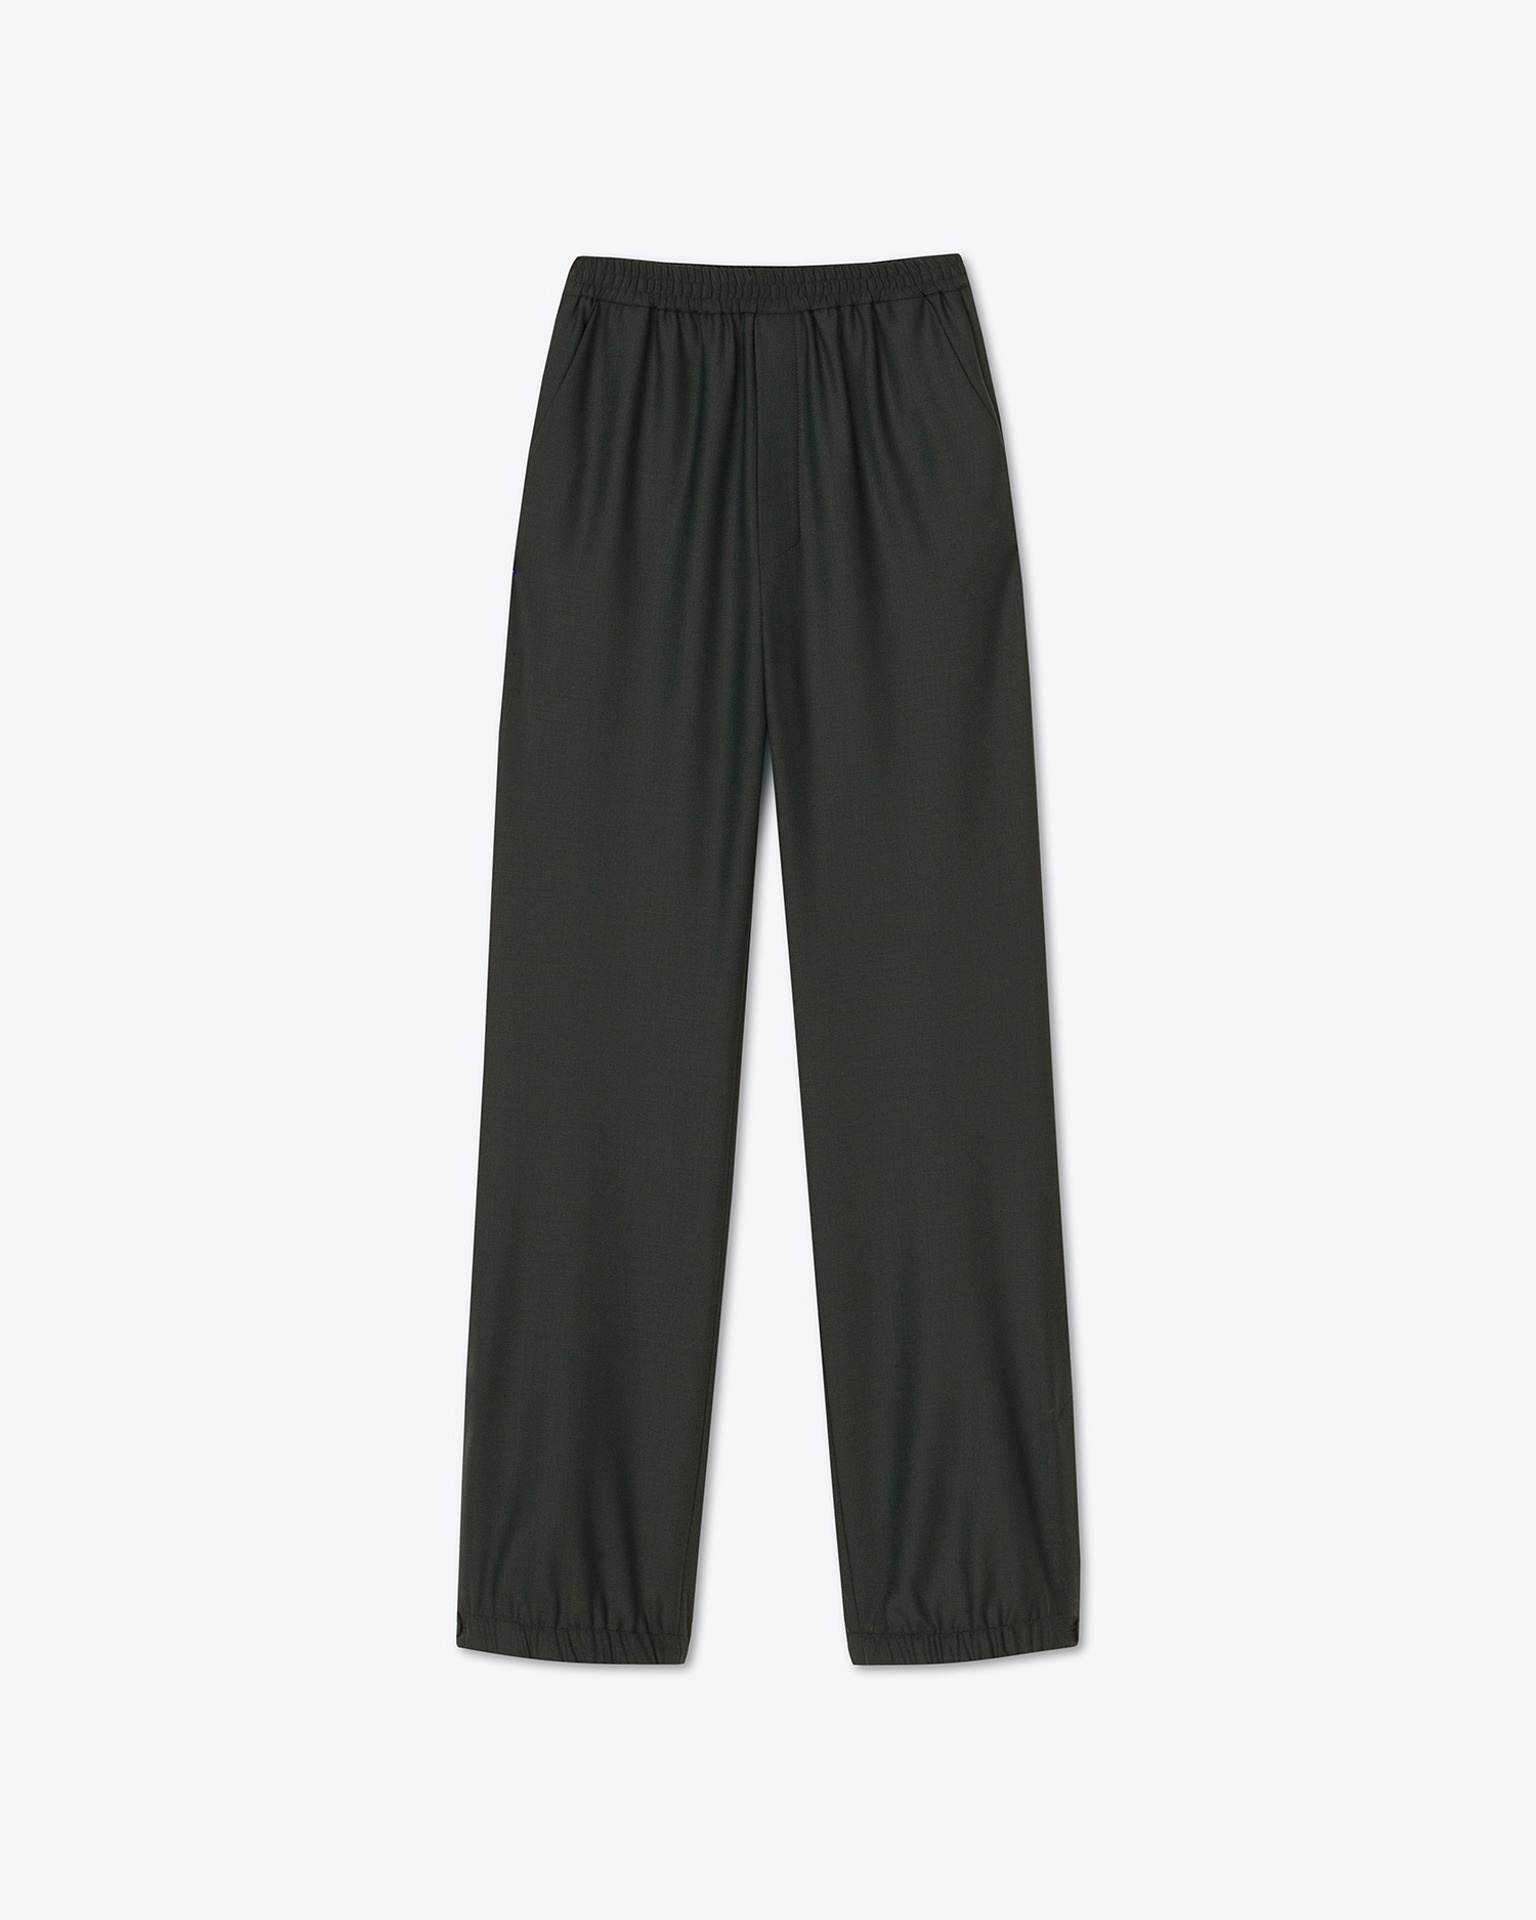 NICIA - Elasticated trouser - Pine green - 1